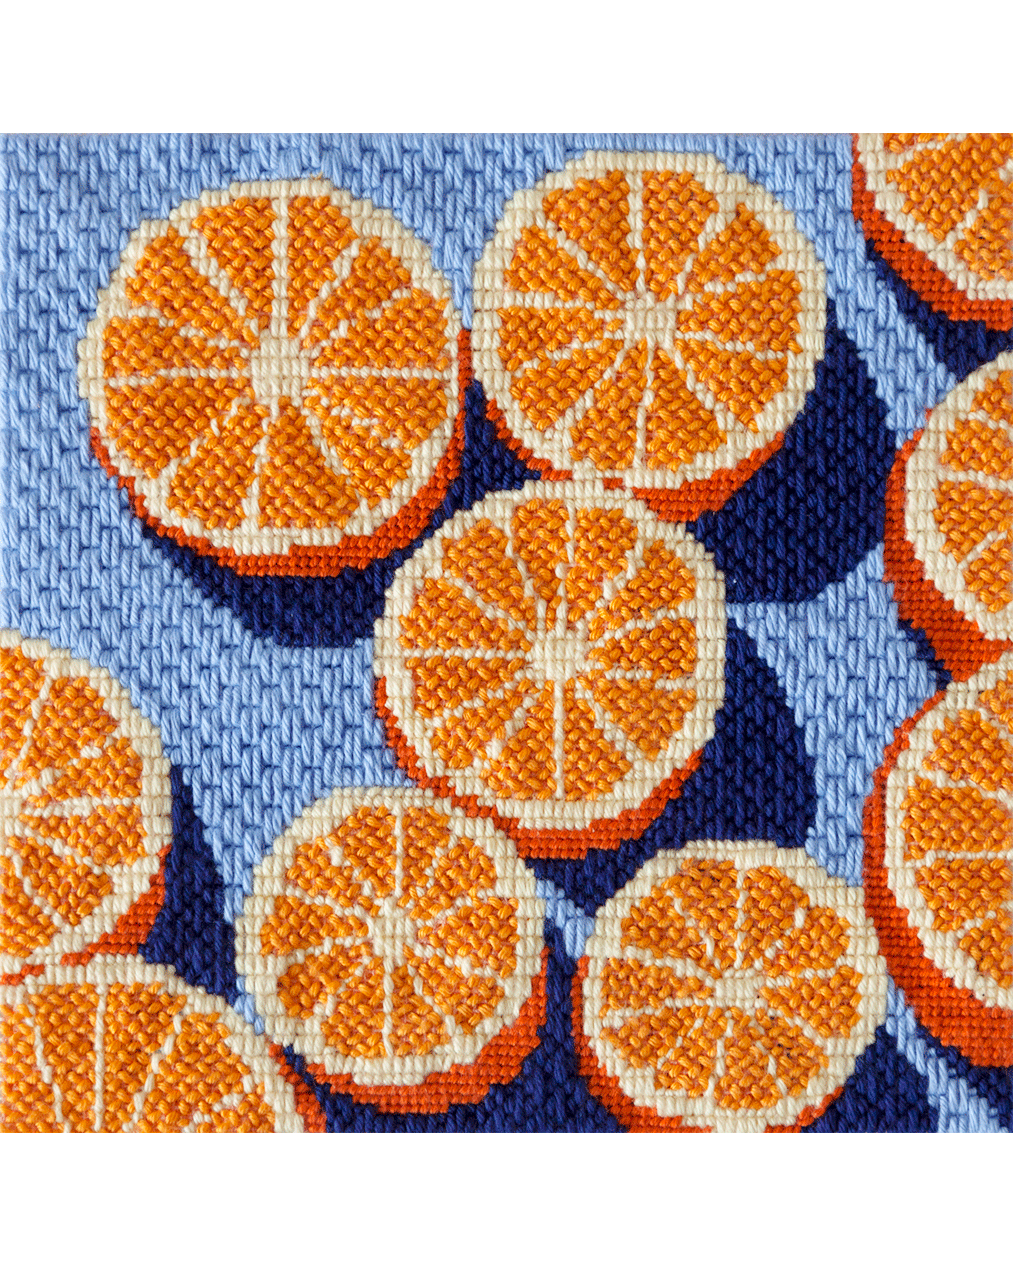 agrumes citrus oranges needlepoint kit tapestry kit by ana popescu for unwind studio